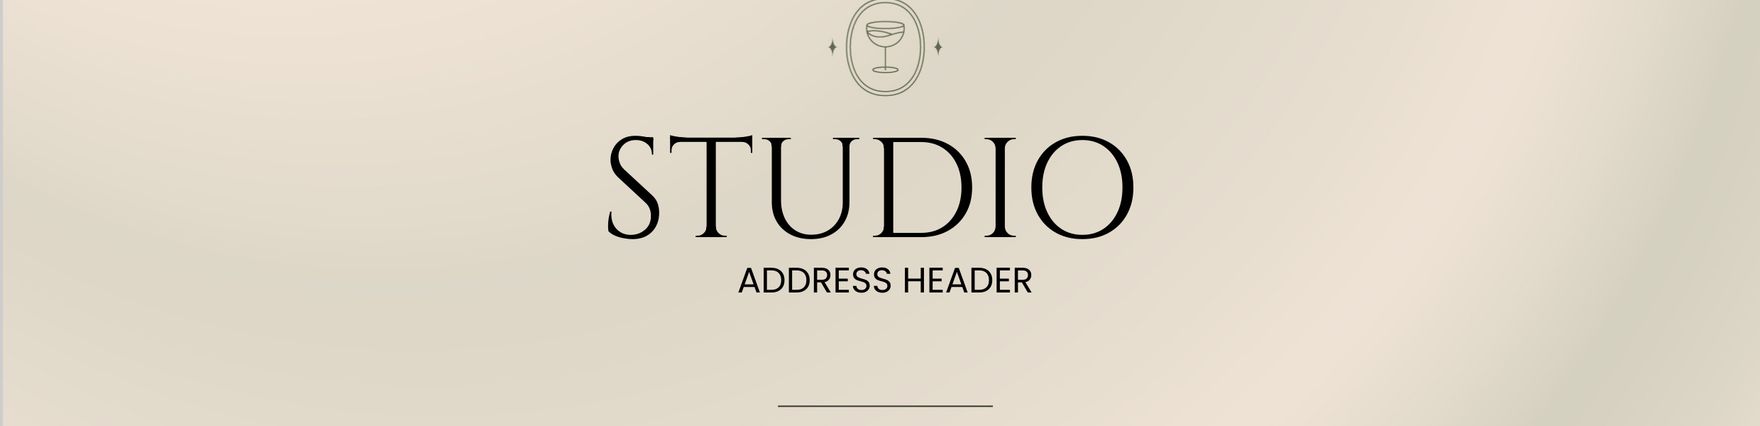 Studio Address Header